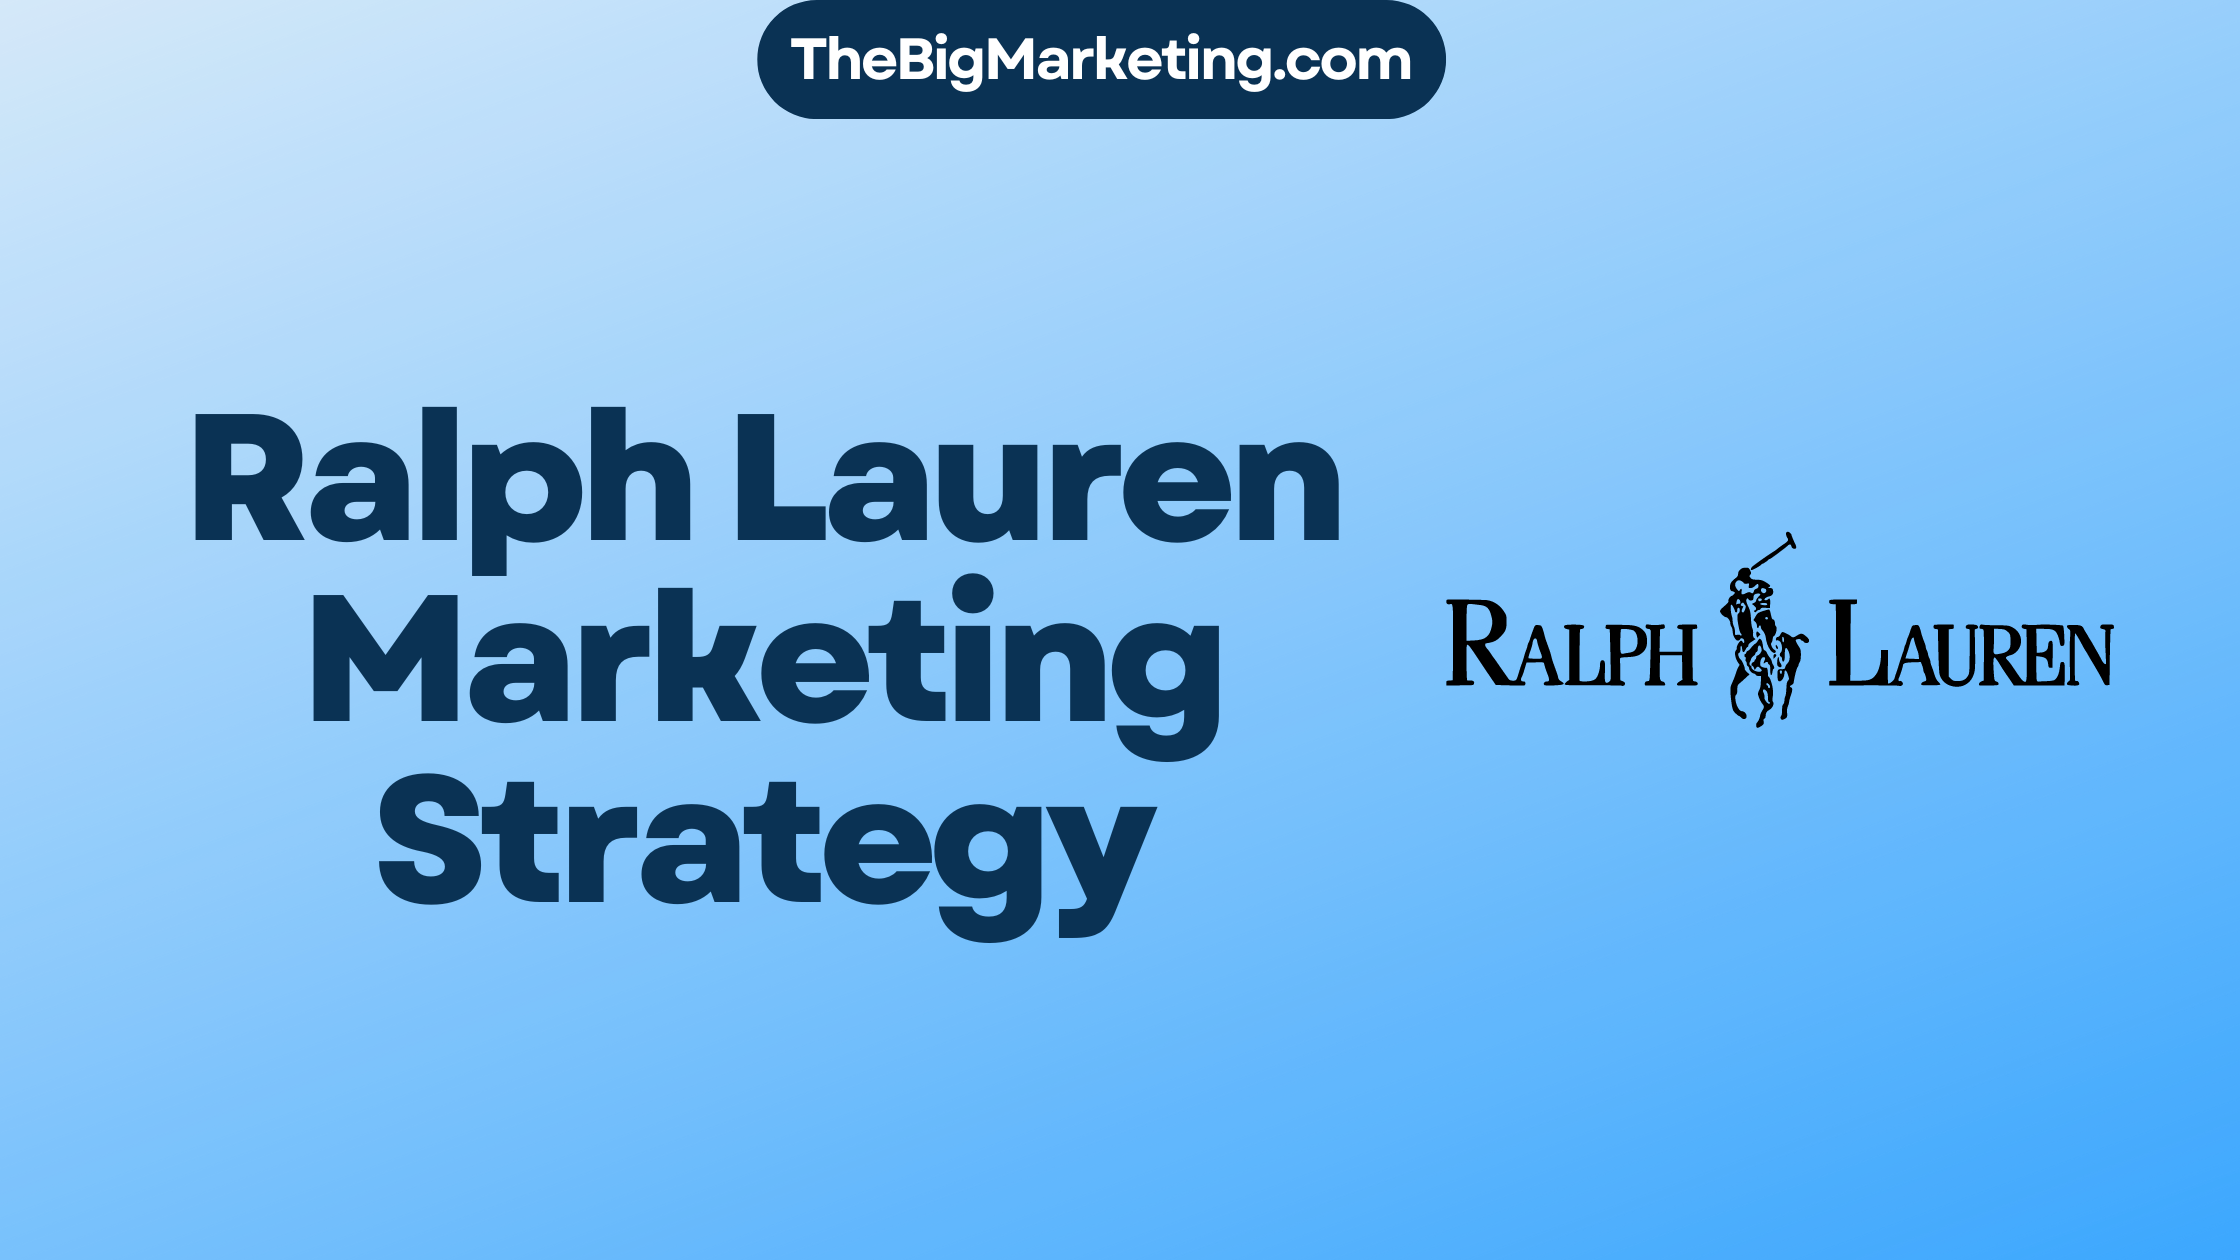 Ralph Lauren Marketing Strategy